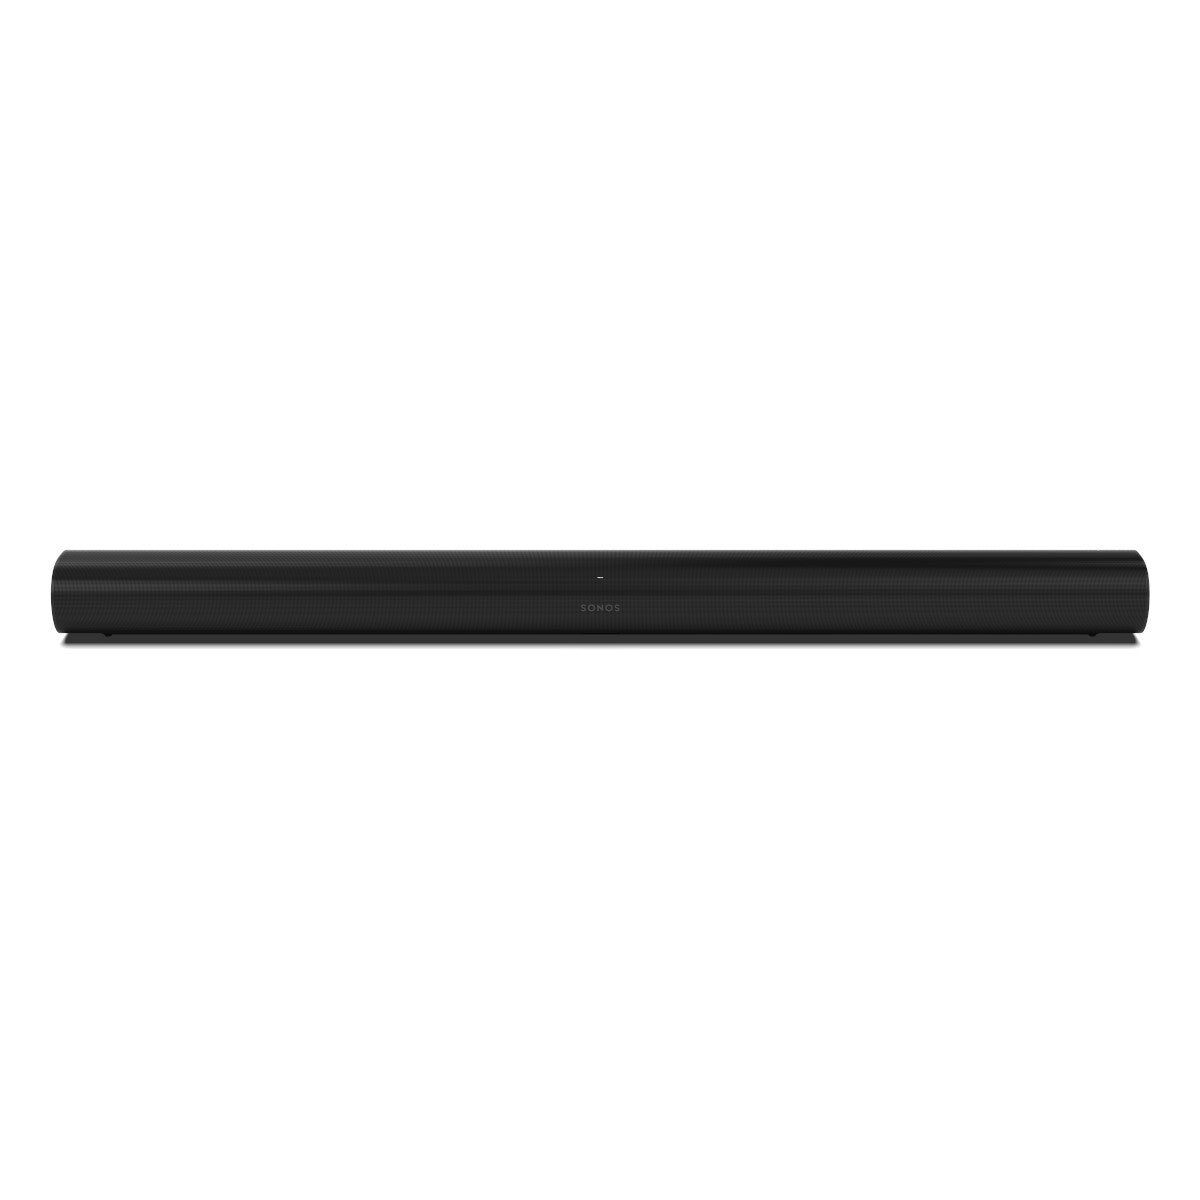 Sonos Arc Wireless Sound Bar with Sanus Extendable Wall Mount (Black)